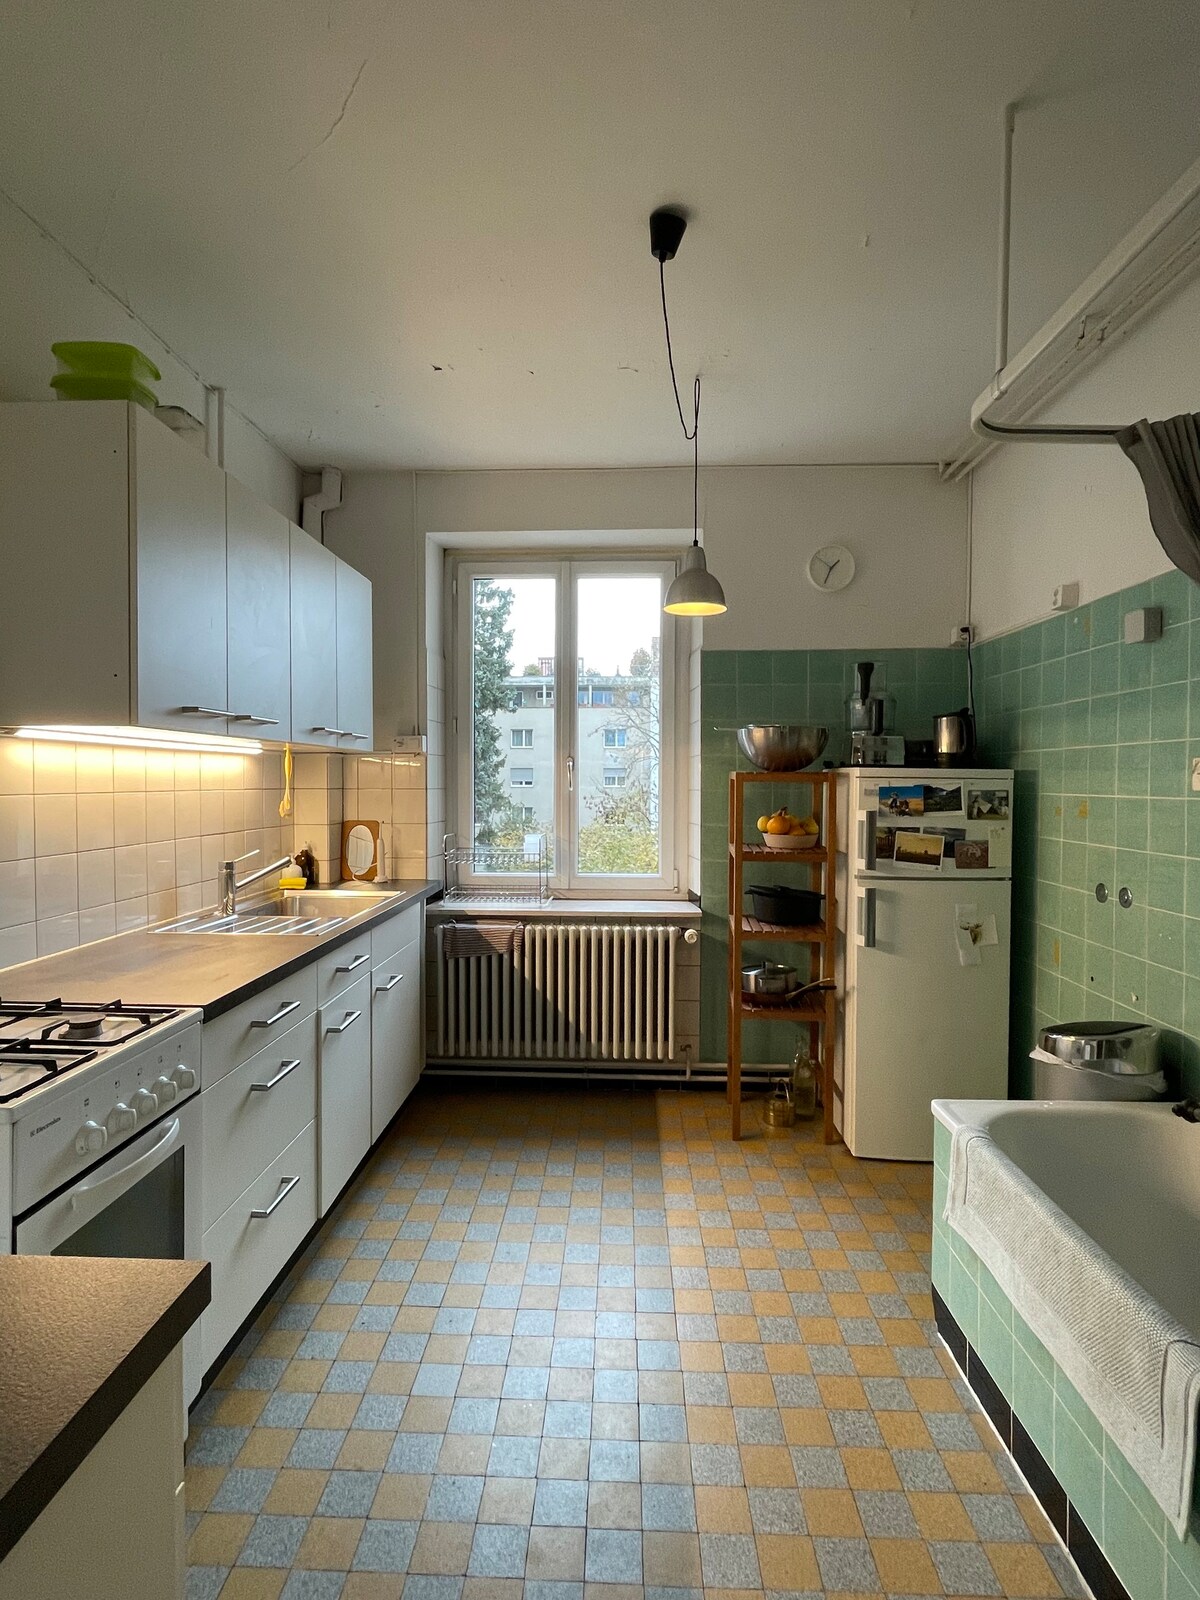 Art Basel - charming apartment